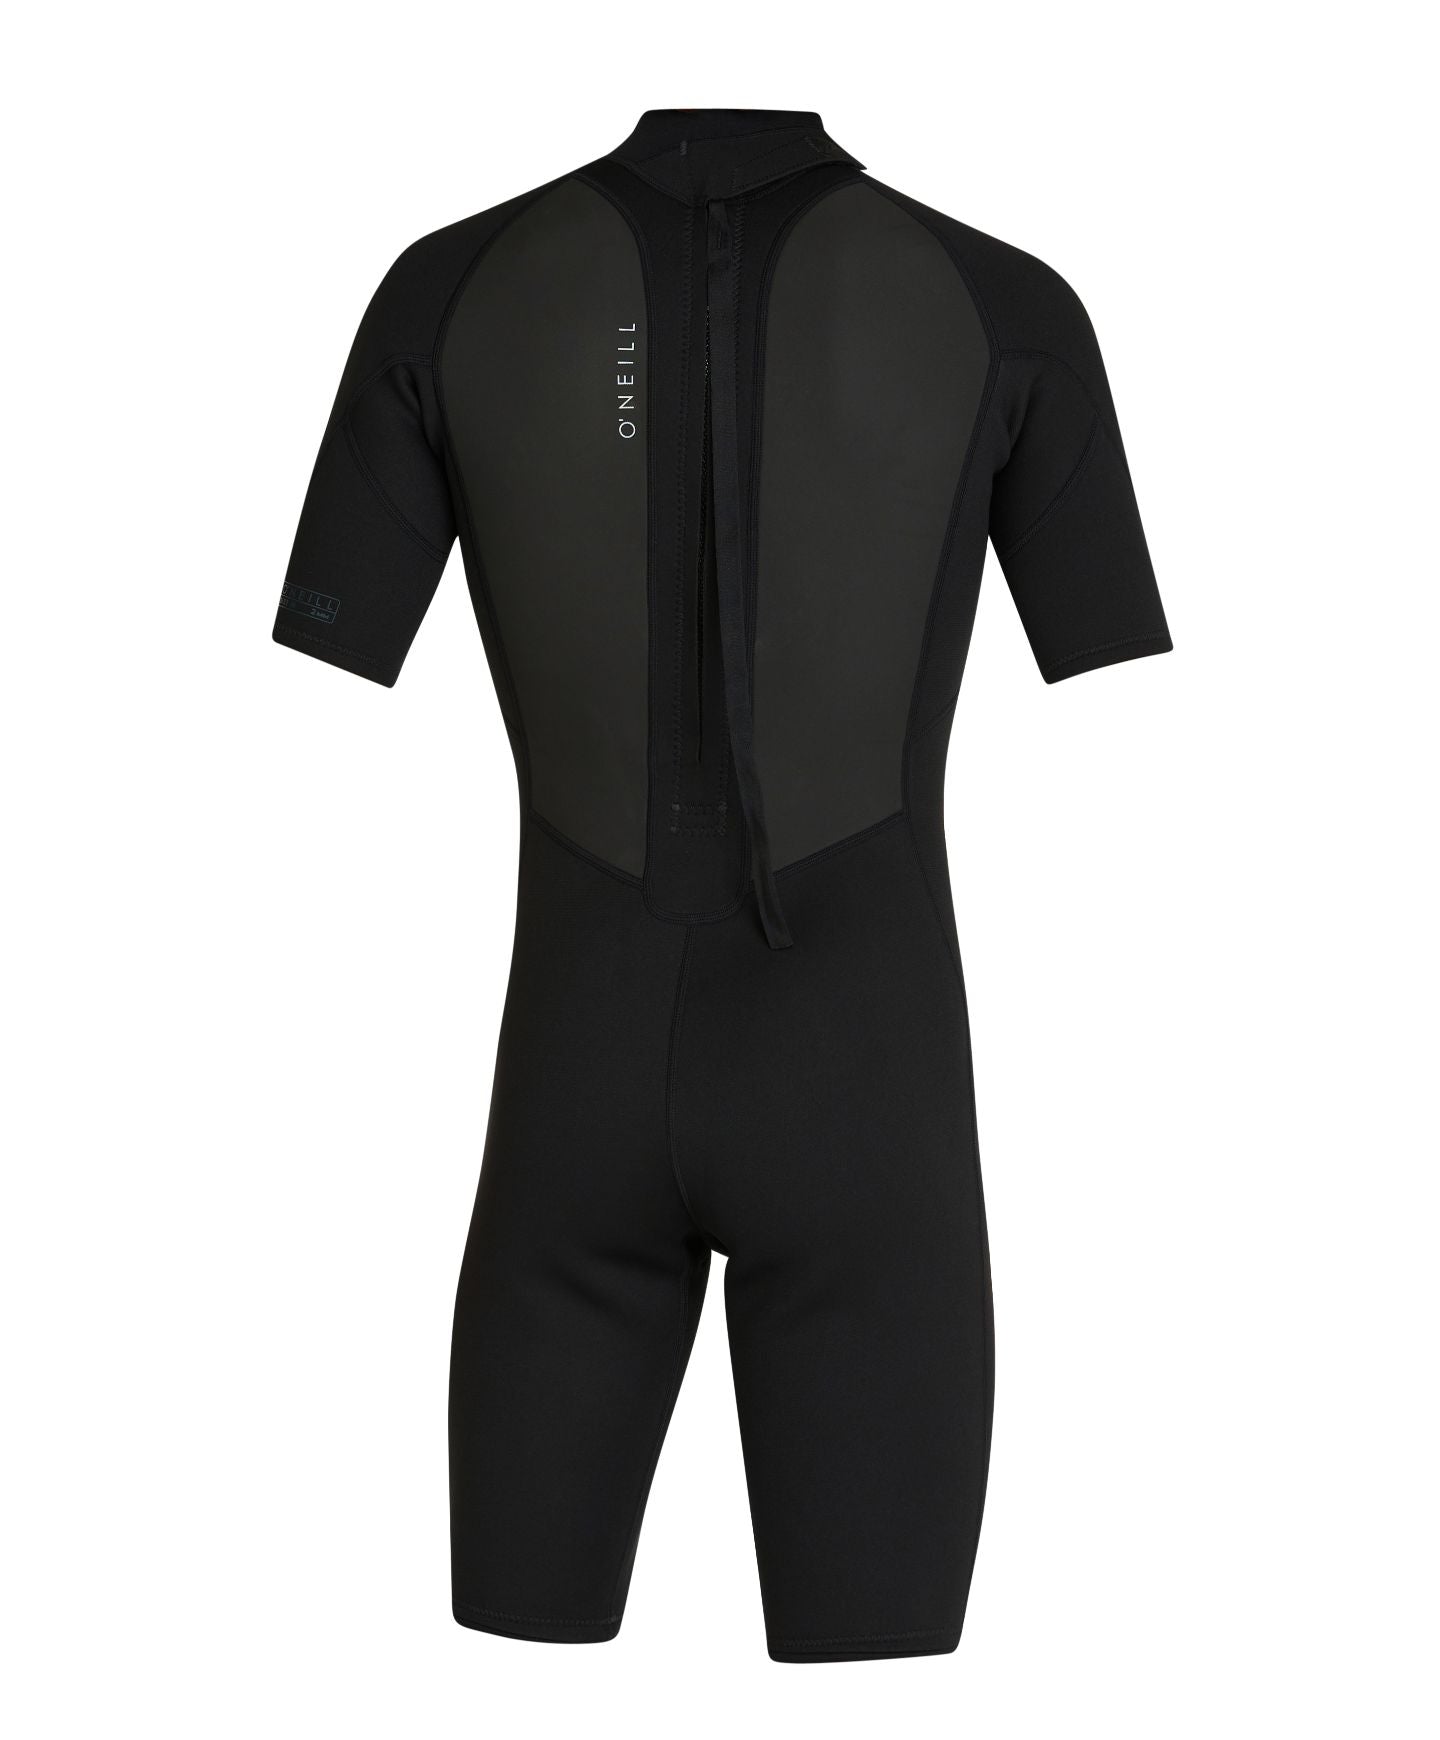 Factor 2mm Spring Suit Back Zip Wetsuit - Black